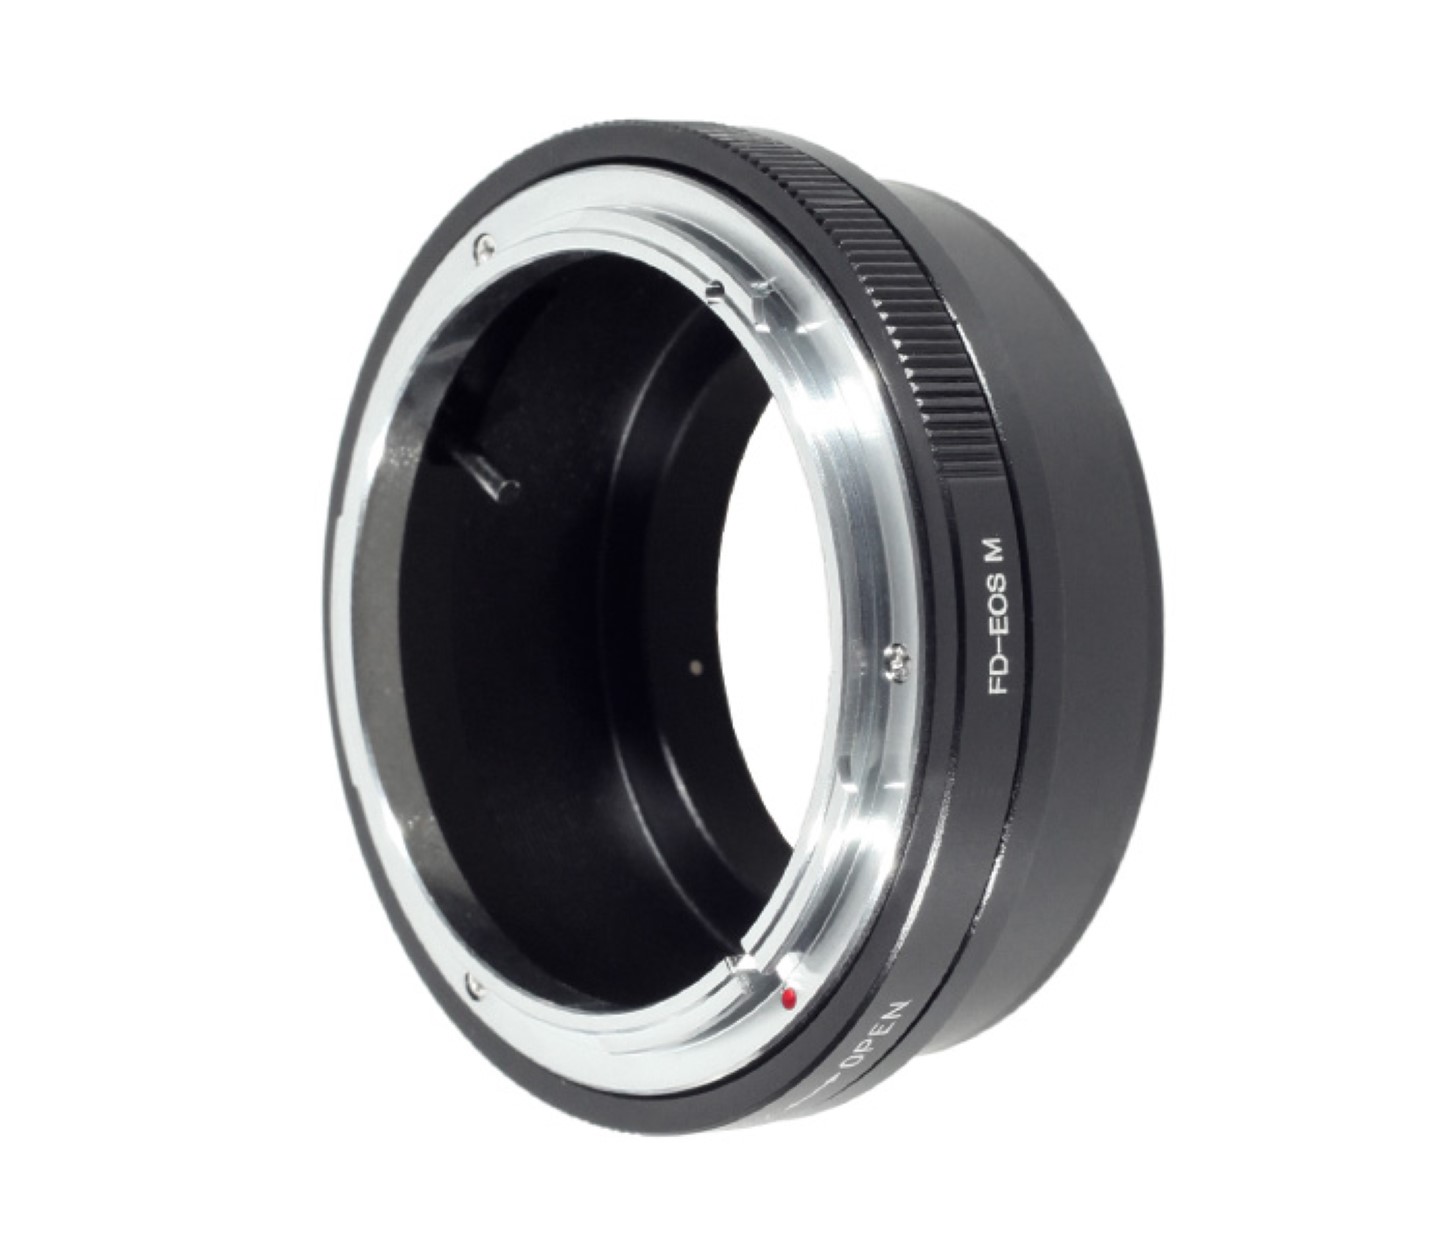 Objektiv-Adapter für Canon FD Objektive an Canon EOS M Kamera